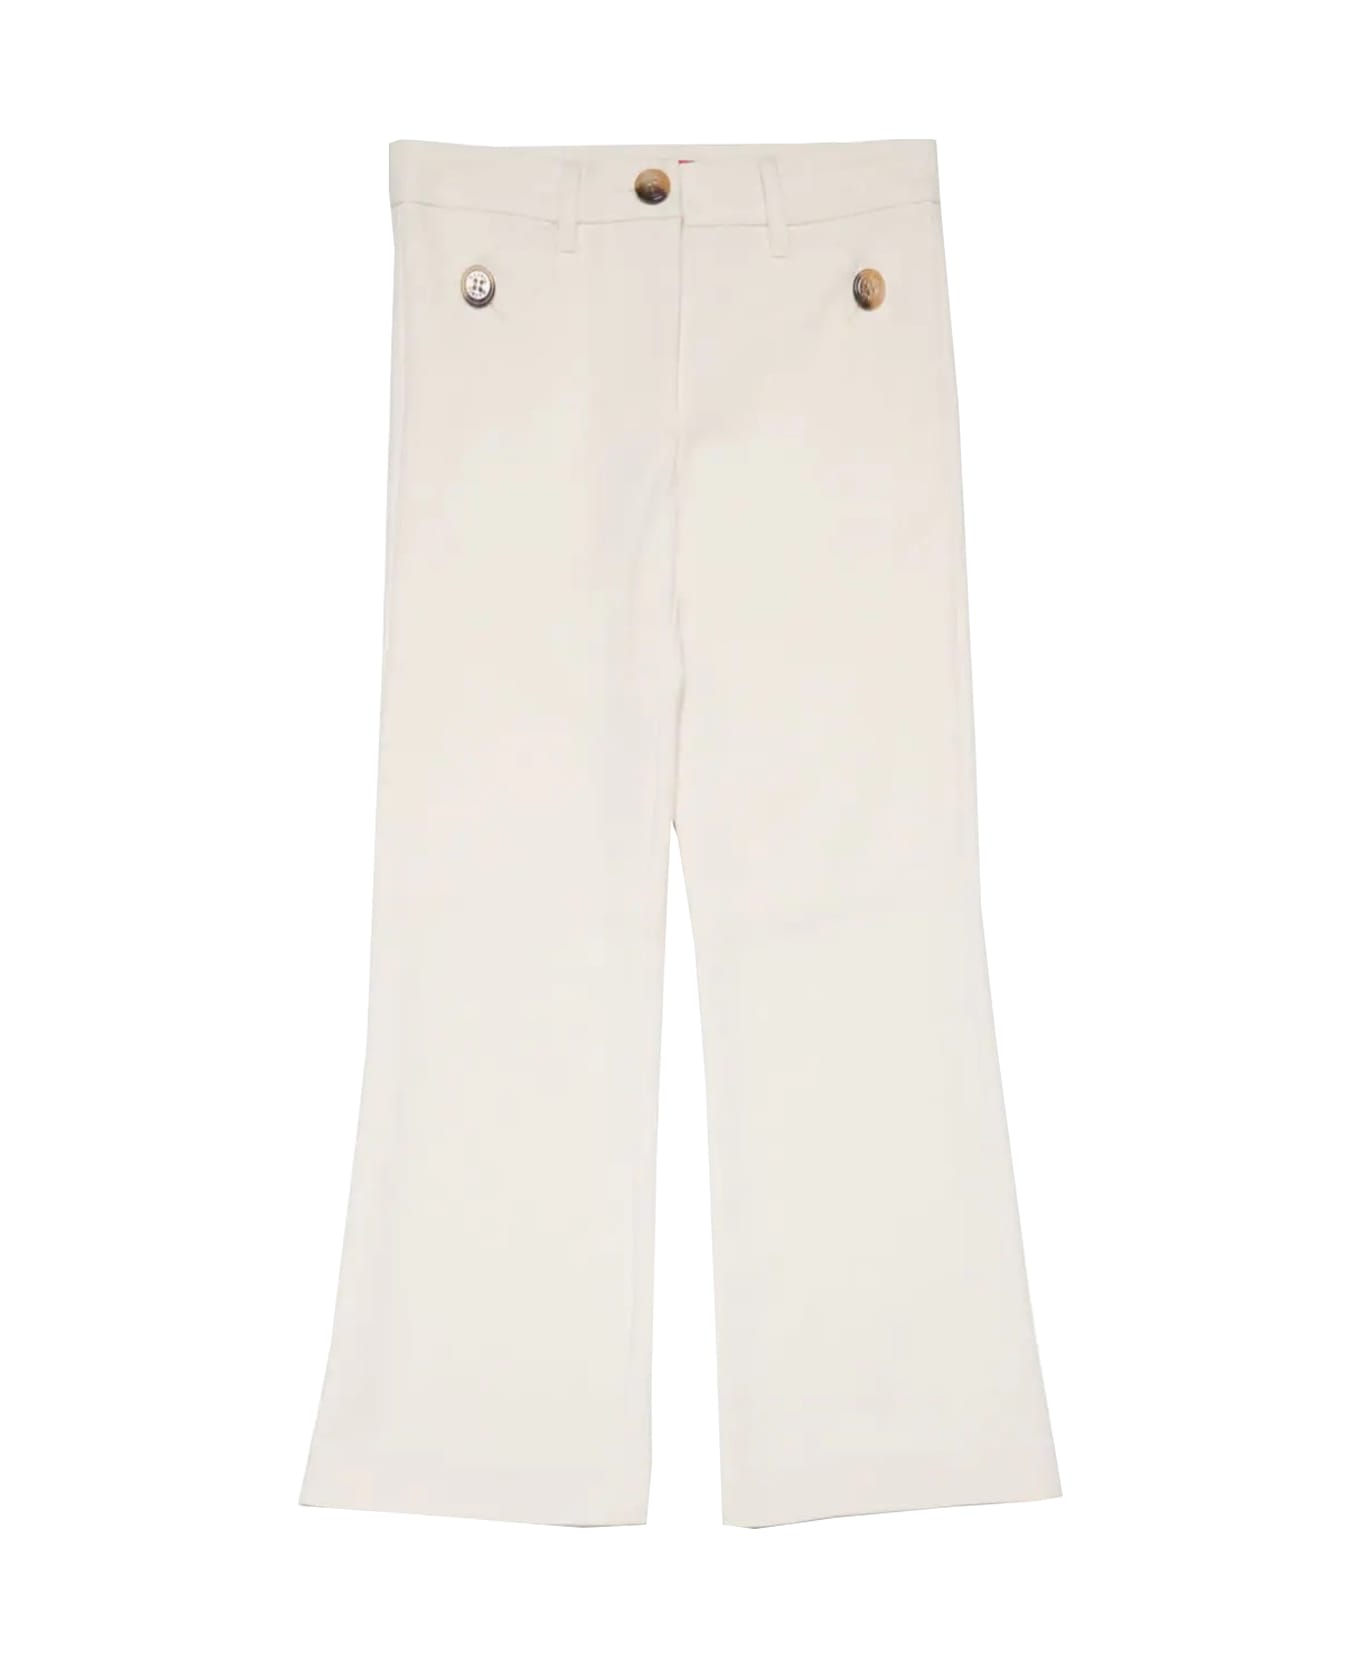 Max&Co. Stretch Viscose Blend Pants - White